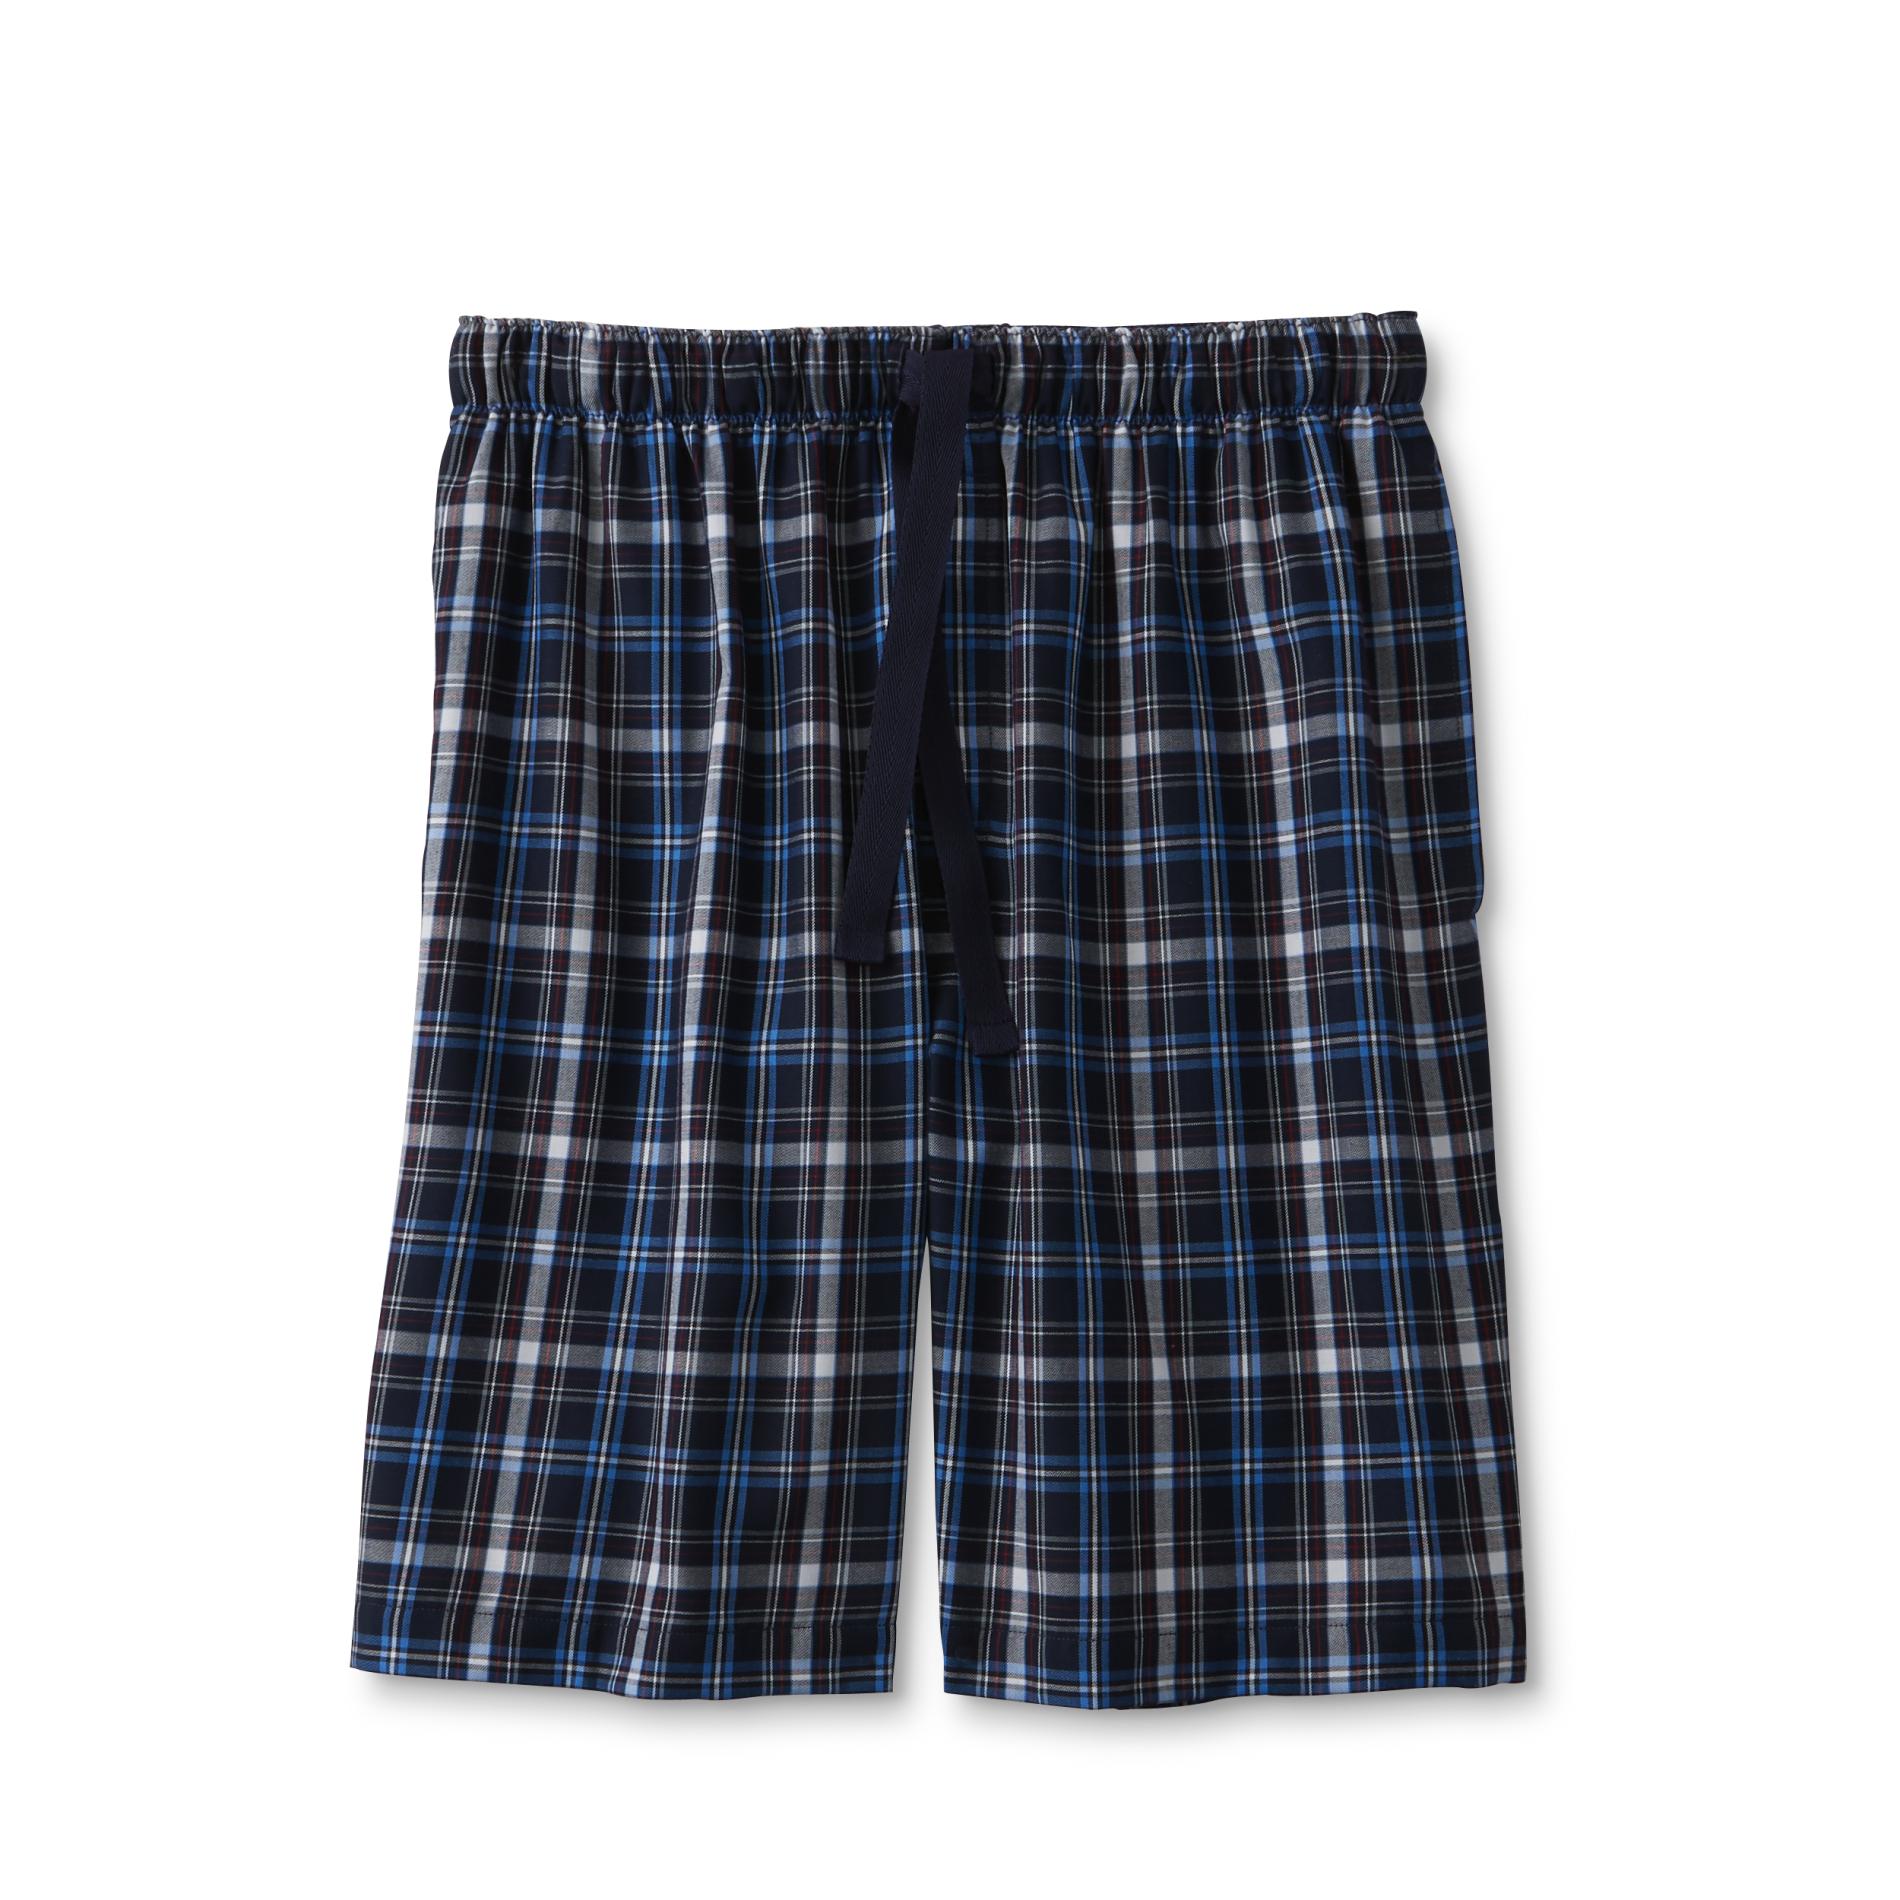 Ove Glove Men's Flannel Pajama Shorts - Plaid